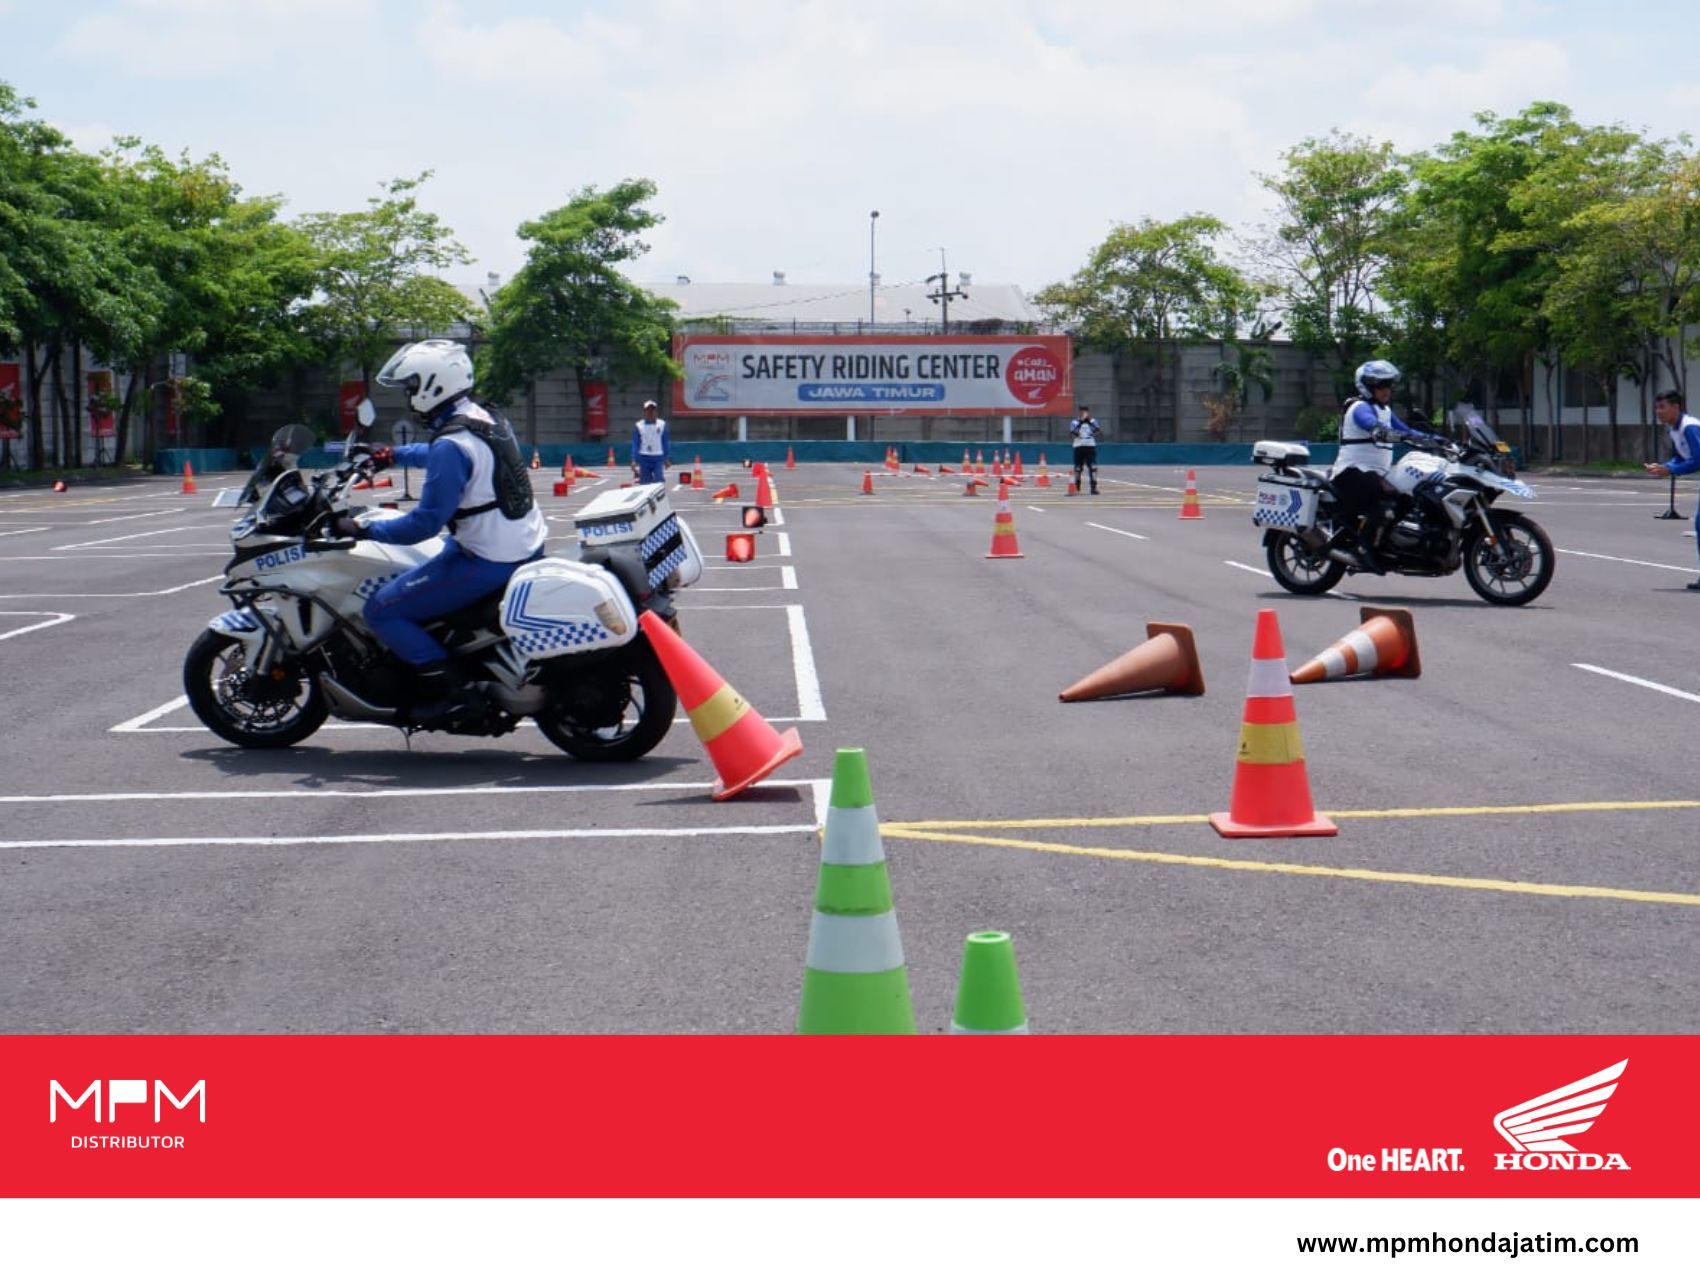 Tingkatkan Kemampuan dan Ketrampilan, Tim RAJAWALI Polrestabes Surabaya Latihan #Cari_Aman Berkendara di MPM Safety Riding Course